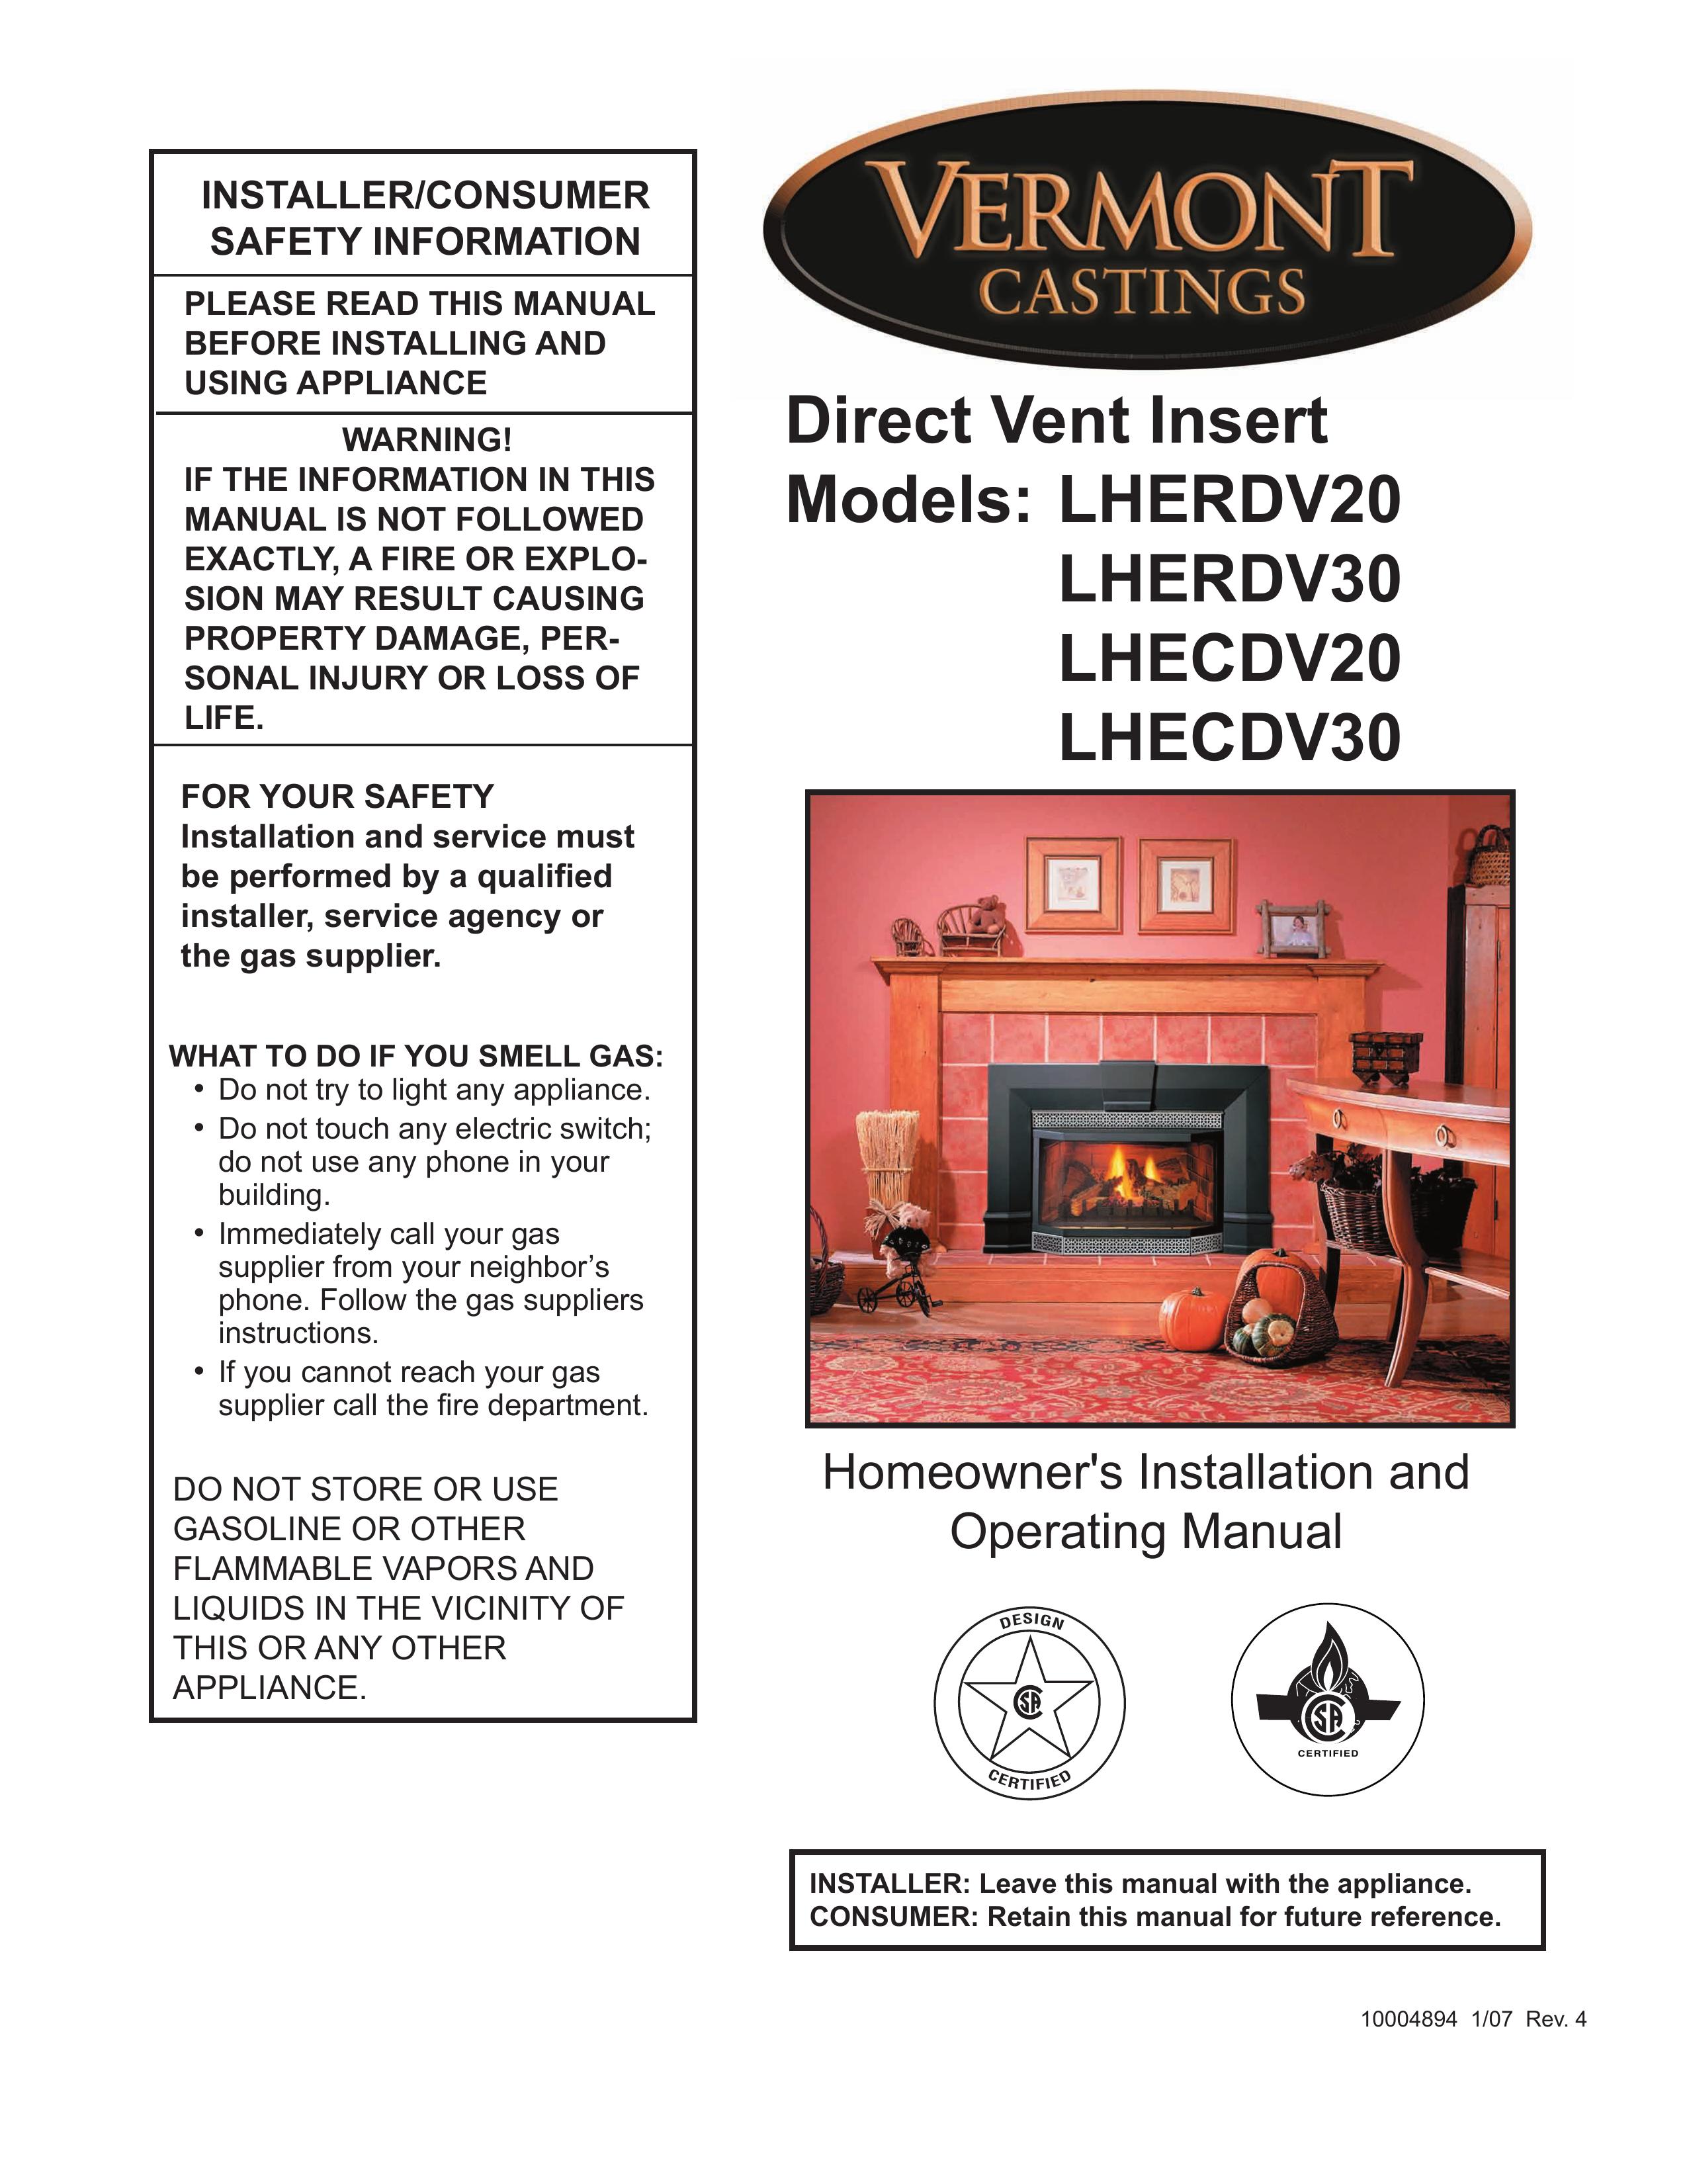 Vermont Casting LHECDV30 Ventilation Hood User Manual